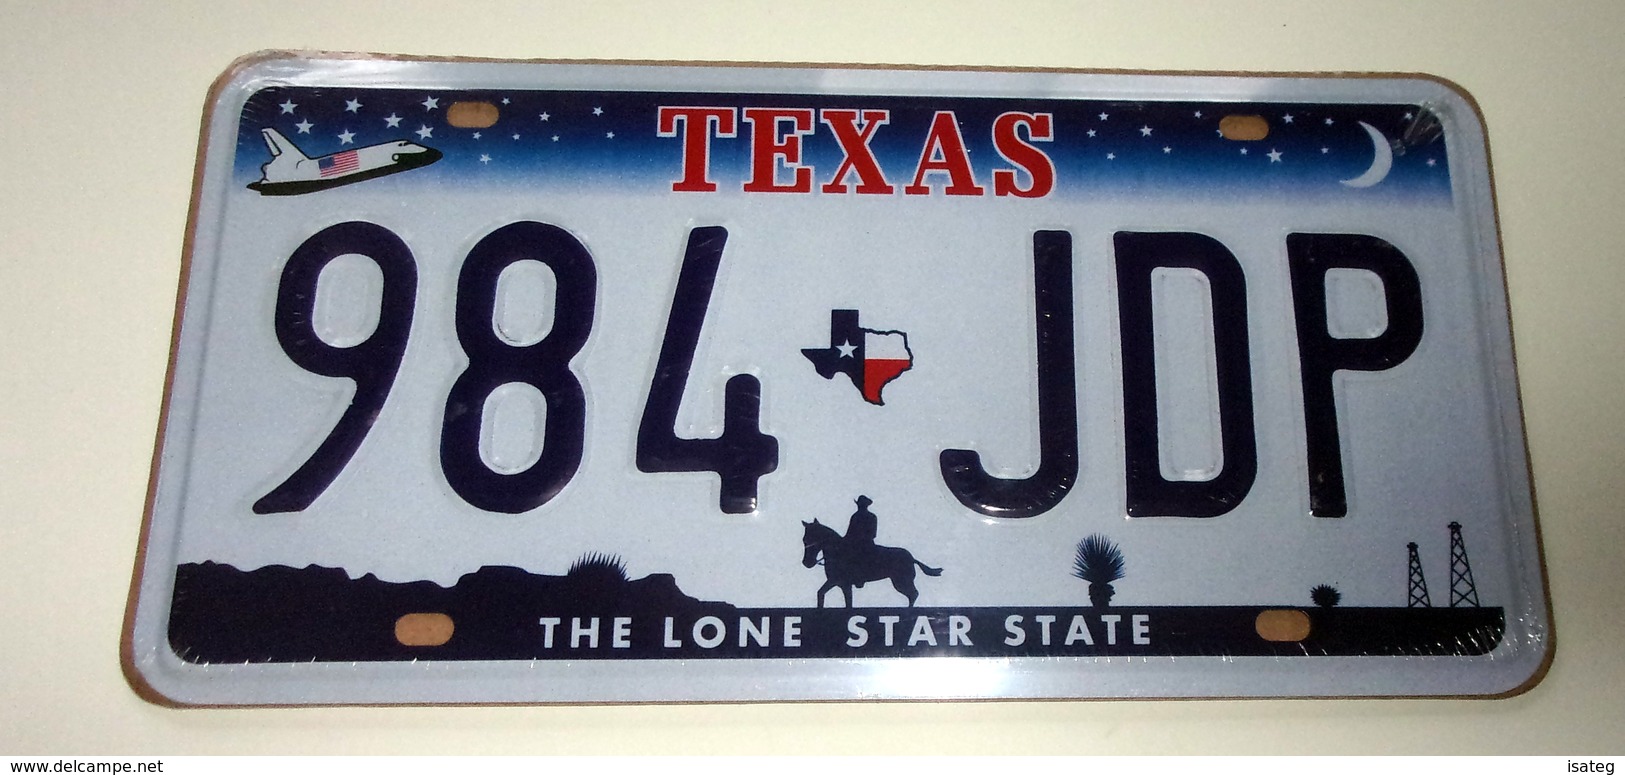 Plaque En Métal Texas - 984 Jdp - The Lone Star State - Tin Signs (after1960)